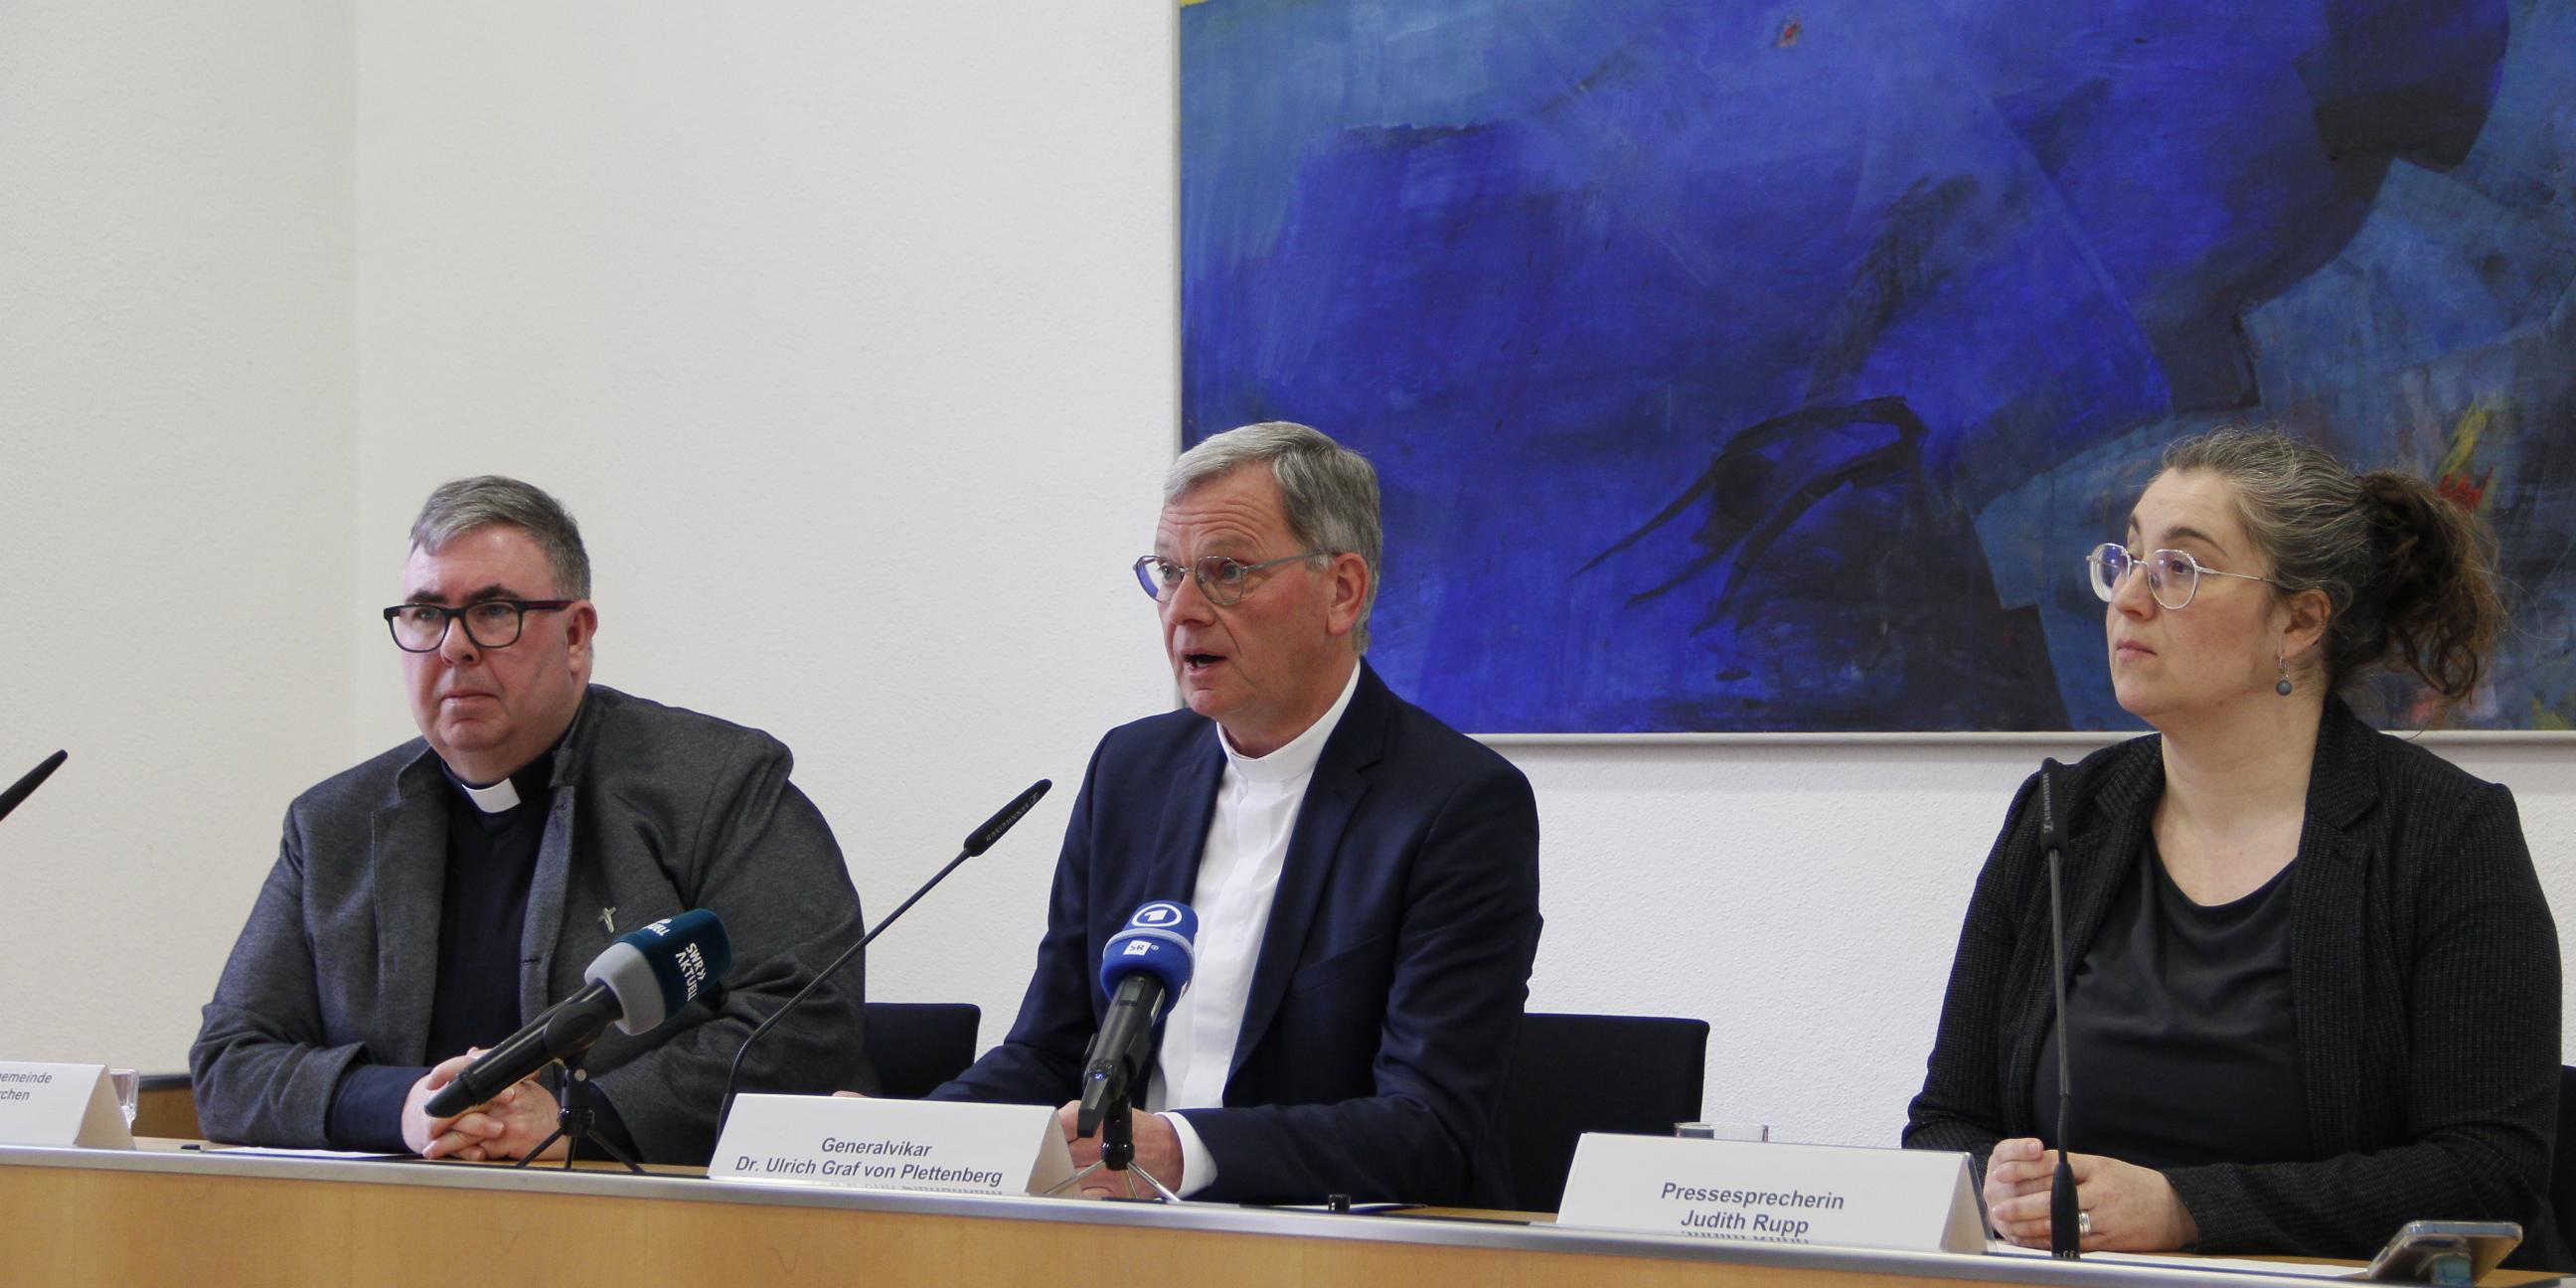 Generalvikar Dr. Ulrich Graf von Plettenberg (Mitte), links Pfarrer Bernd Seibel und Pressesprecherin Judith Rupp.